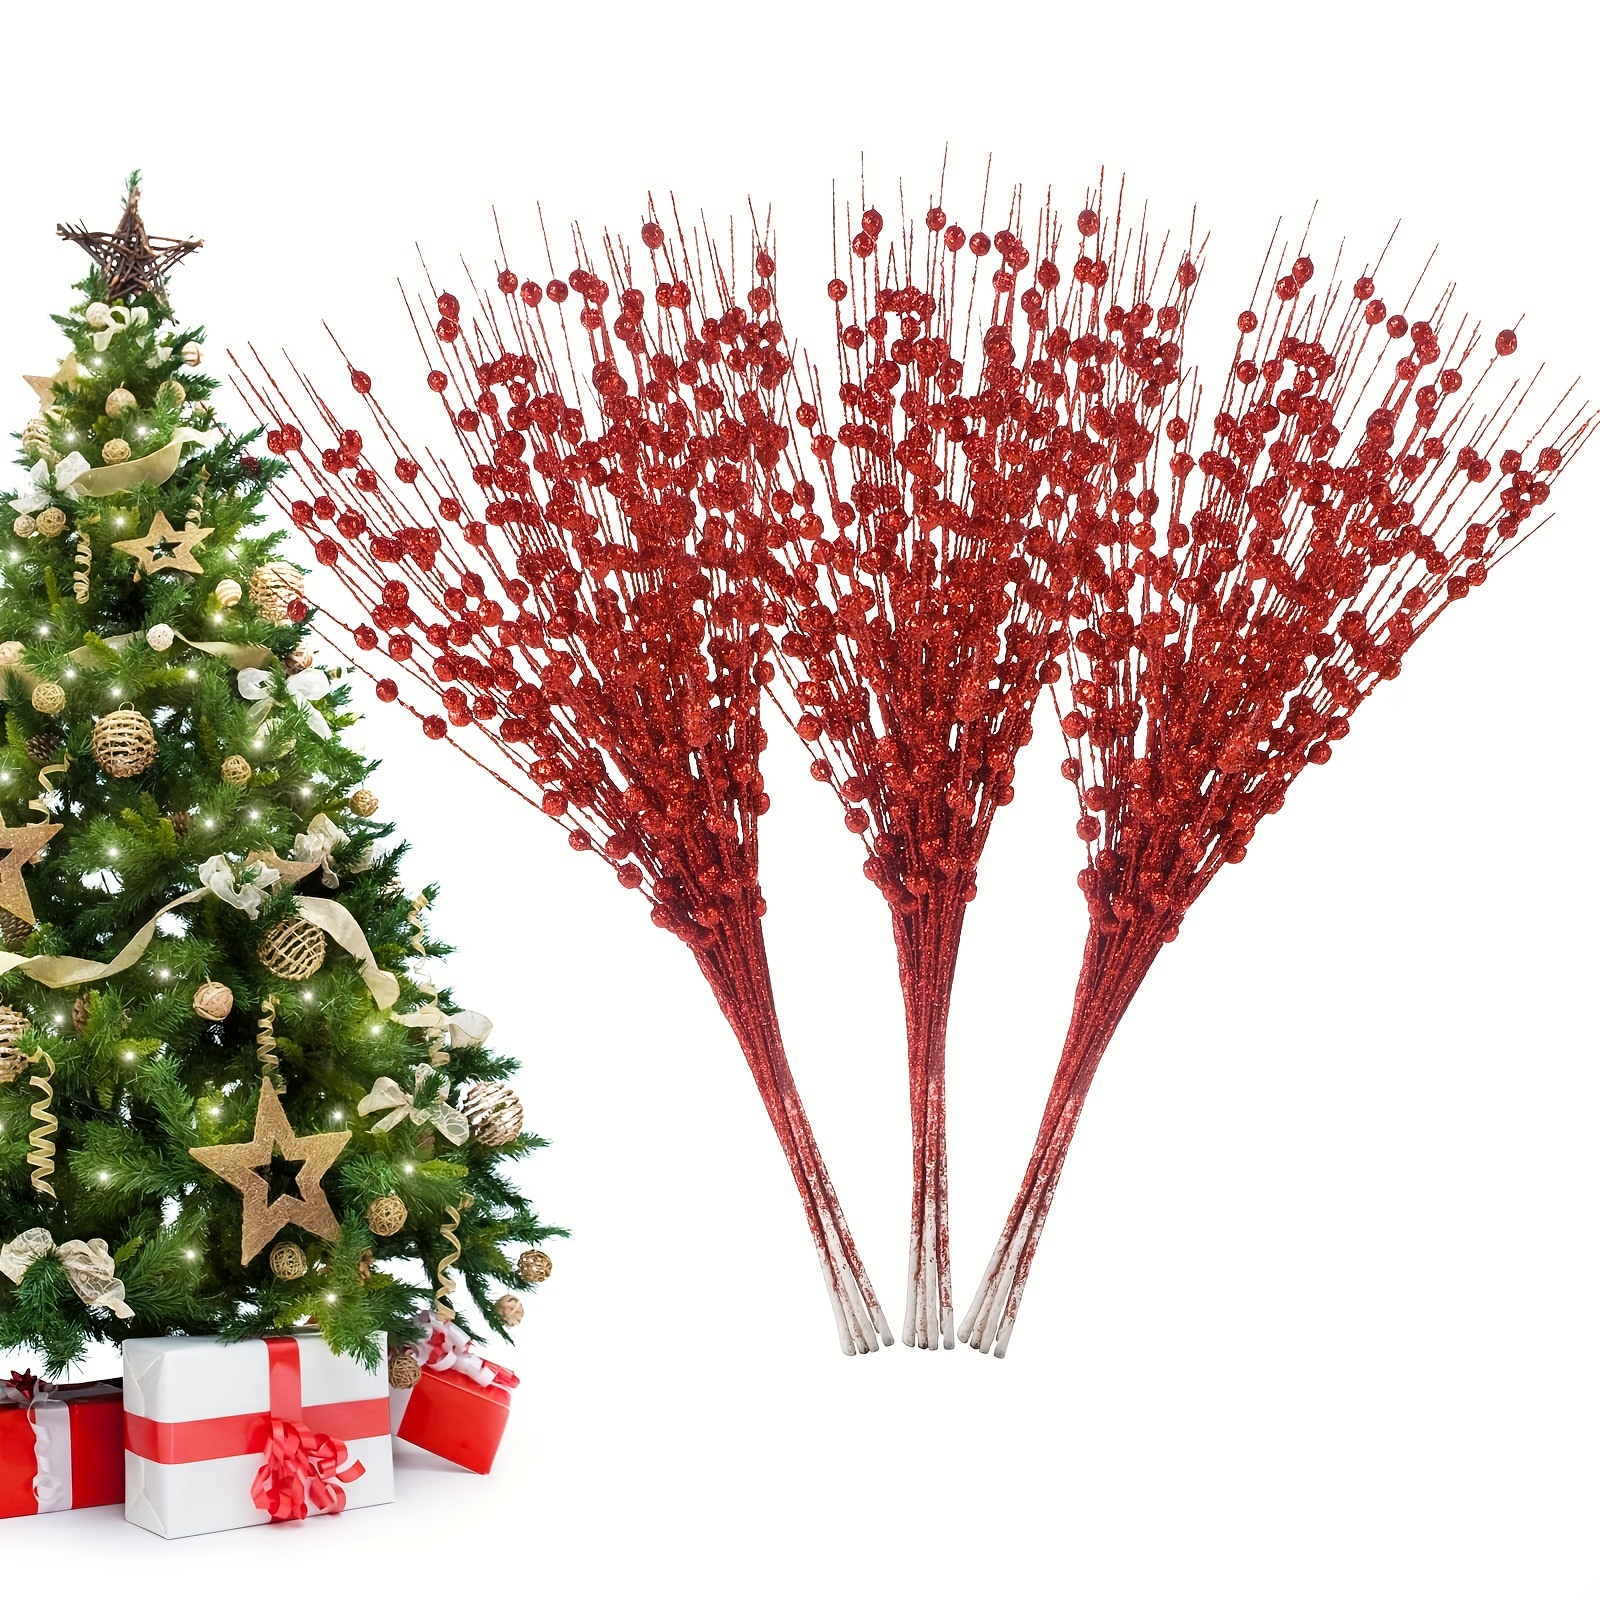 

6pcs Artificial Glitter Berry Stem Ornament, Fake Christmas Picks Decorative Glitter Sticks For Christmas Tree Diy Wreath Crafts Gift Fireplace Holiday Home Decor